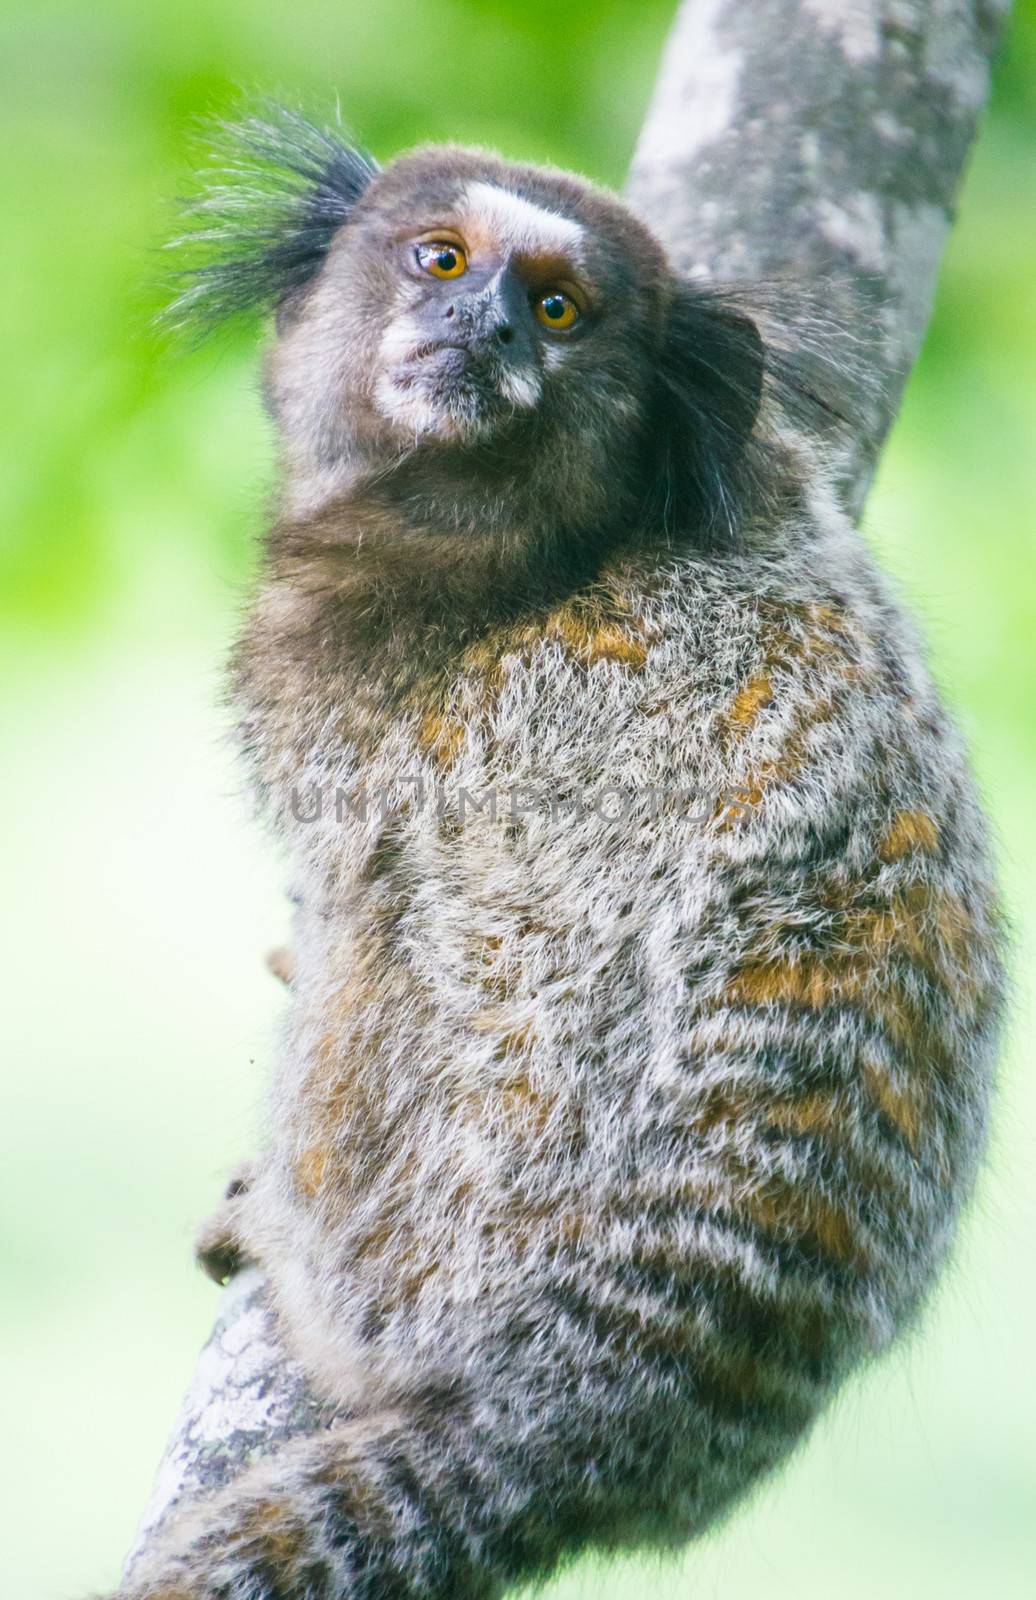 Common marmoset or White-eared marmoset (Callithrix jacchus); New World monkey